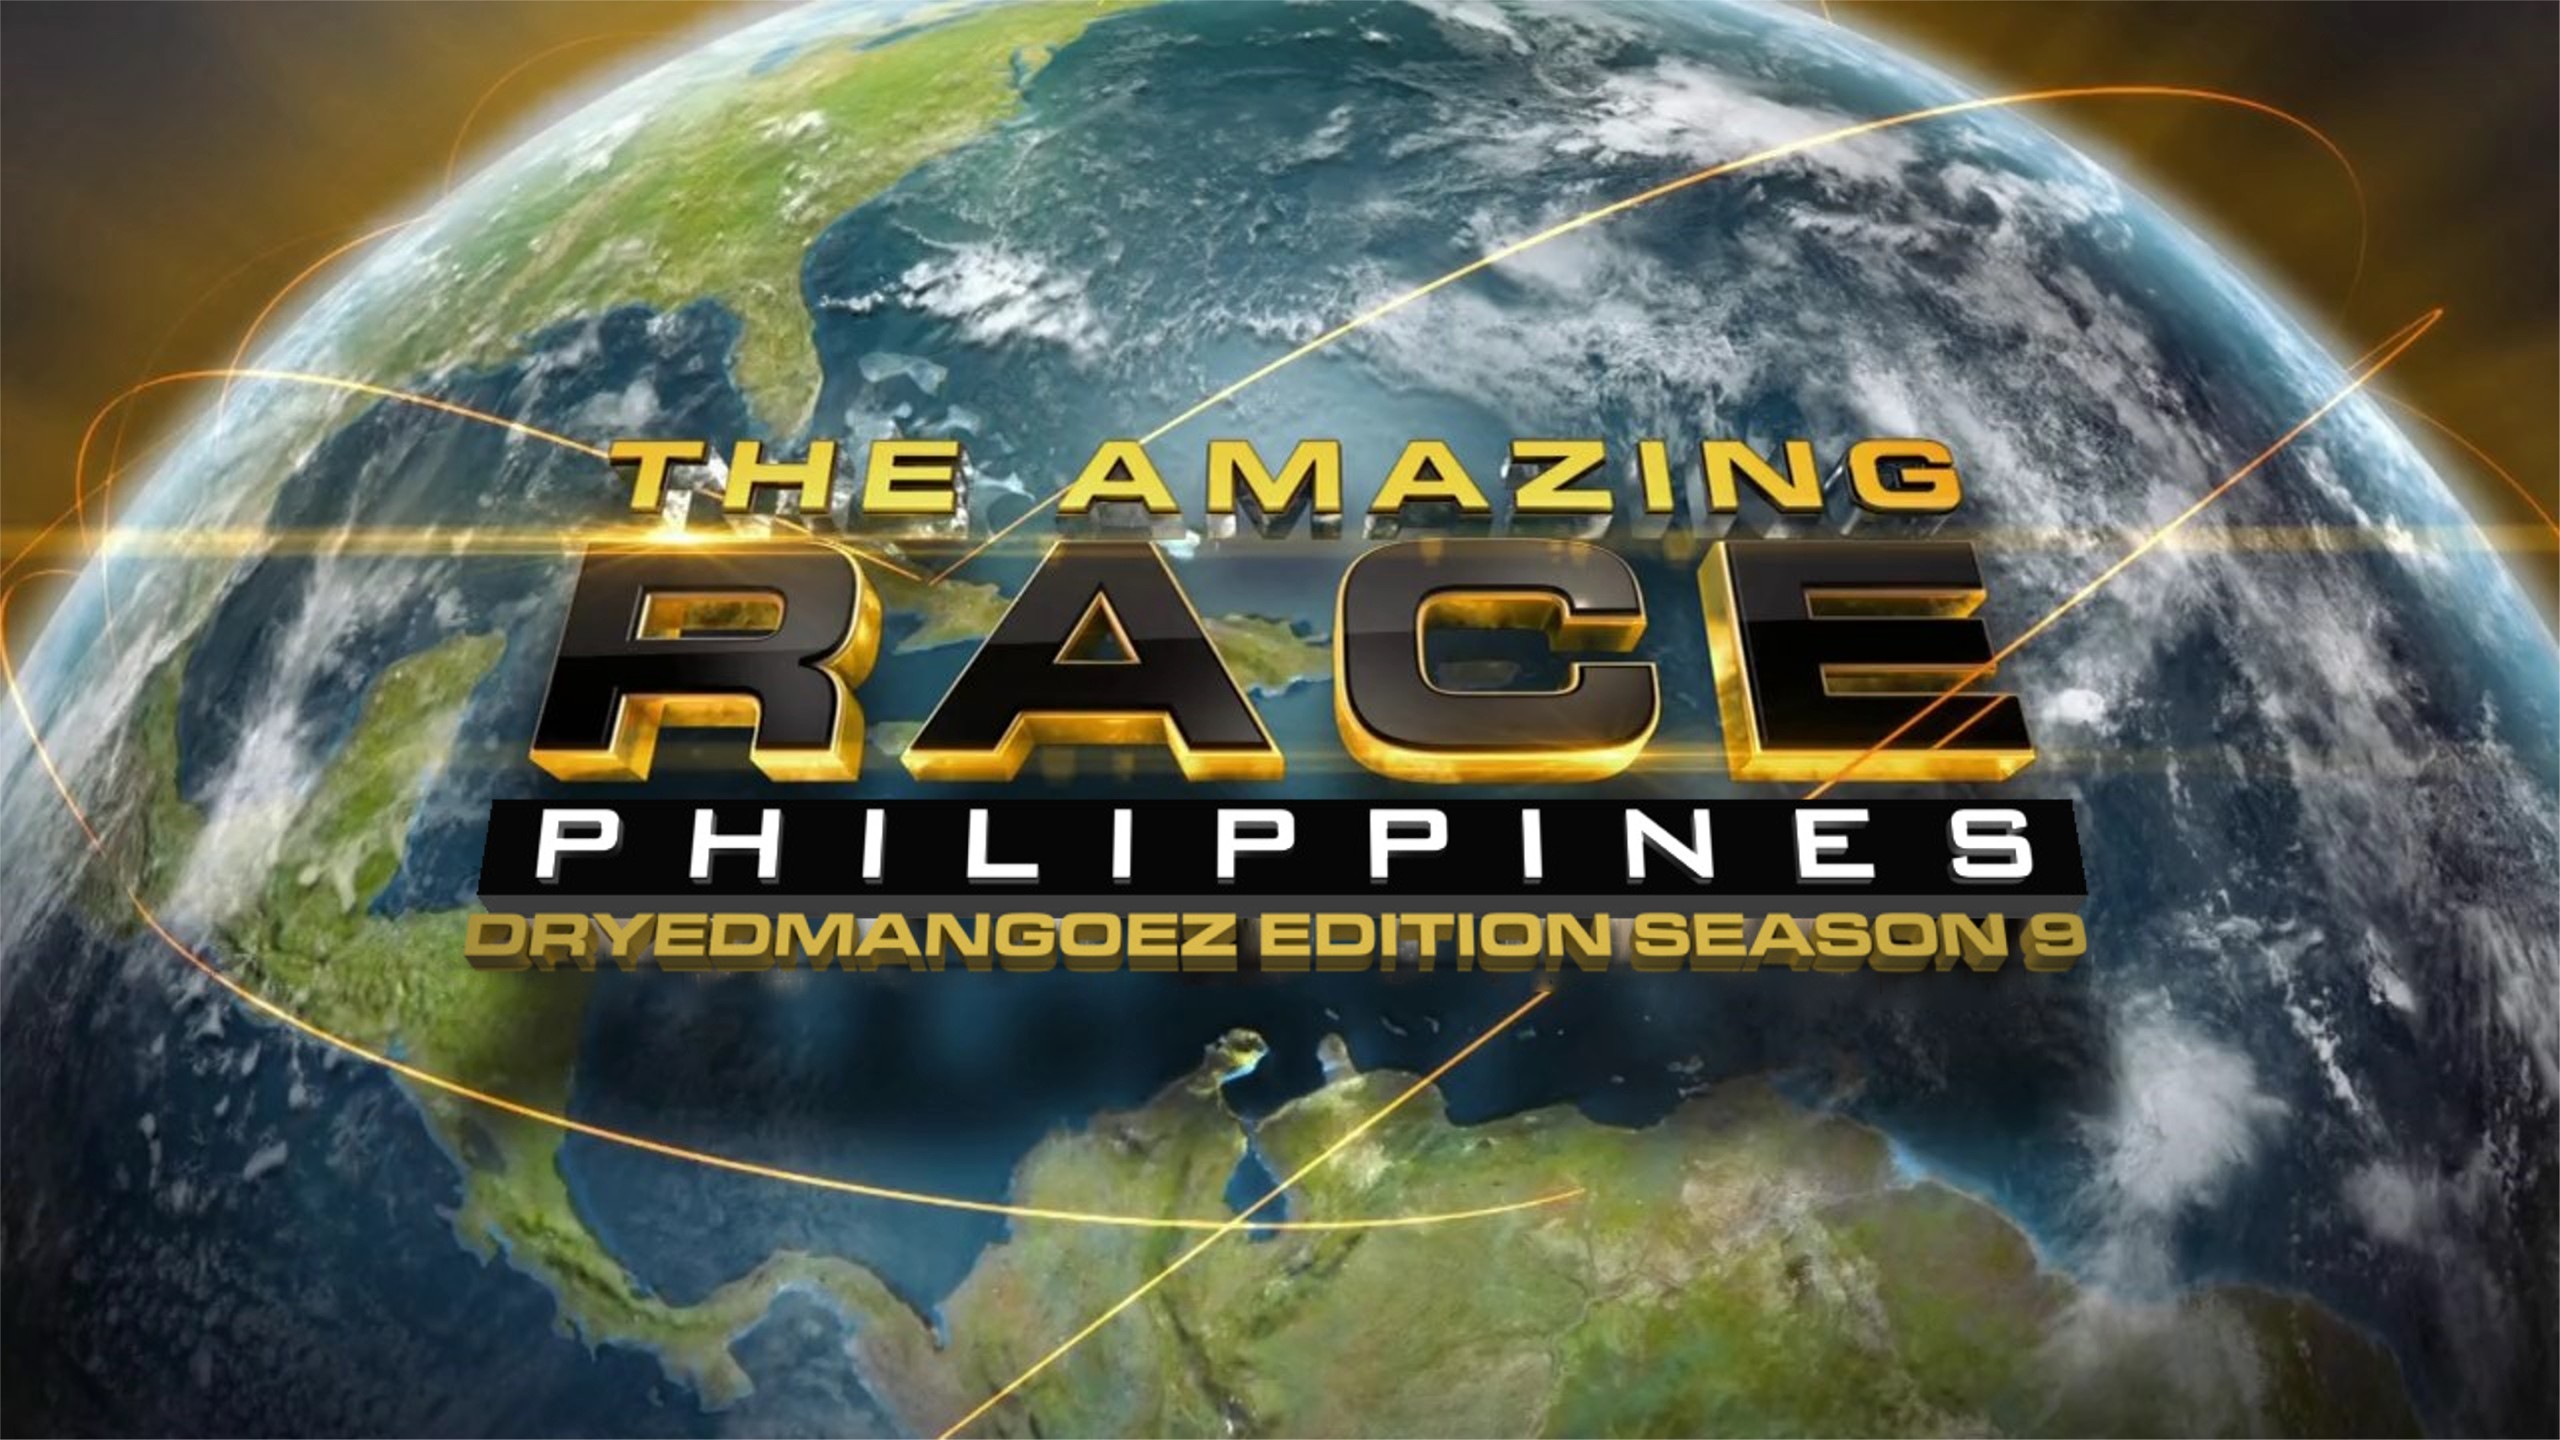 The Amazing Race Philippines: DryedMangoez Edition Season 9